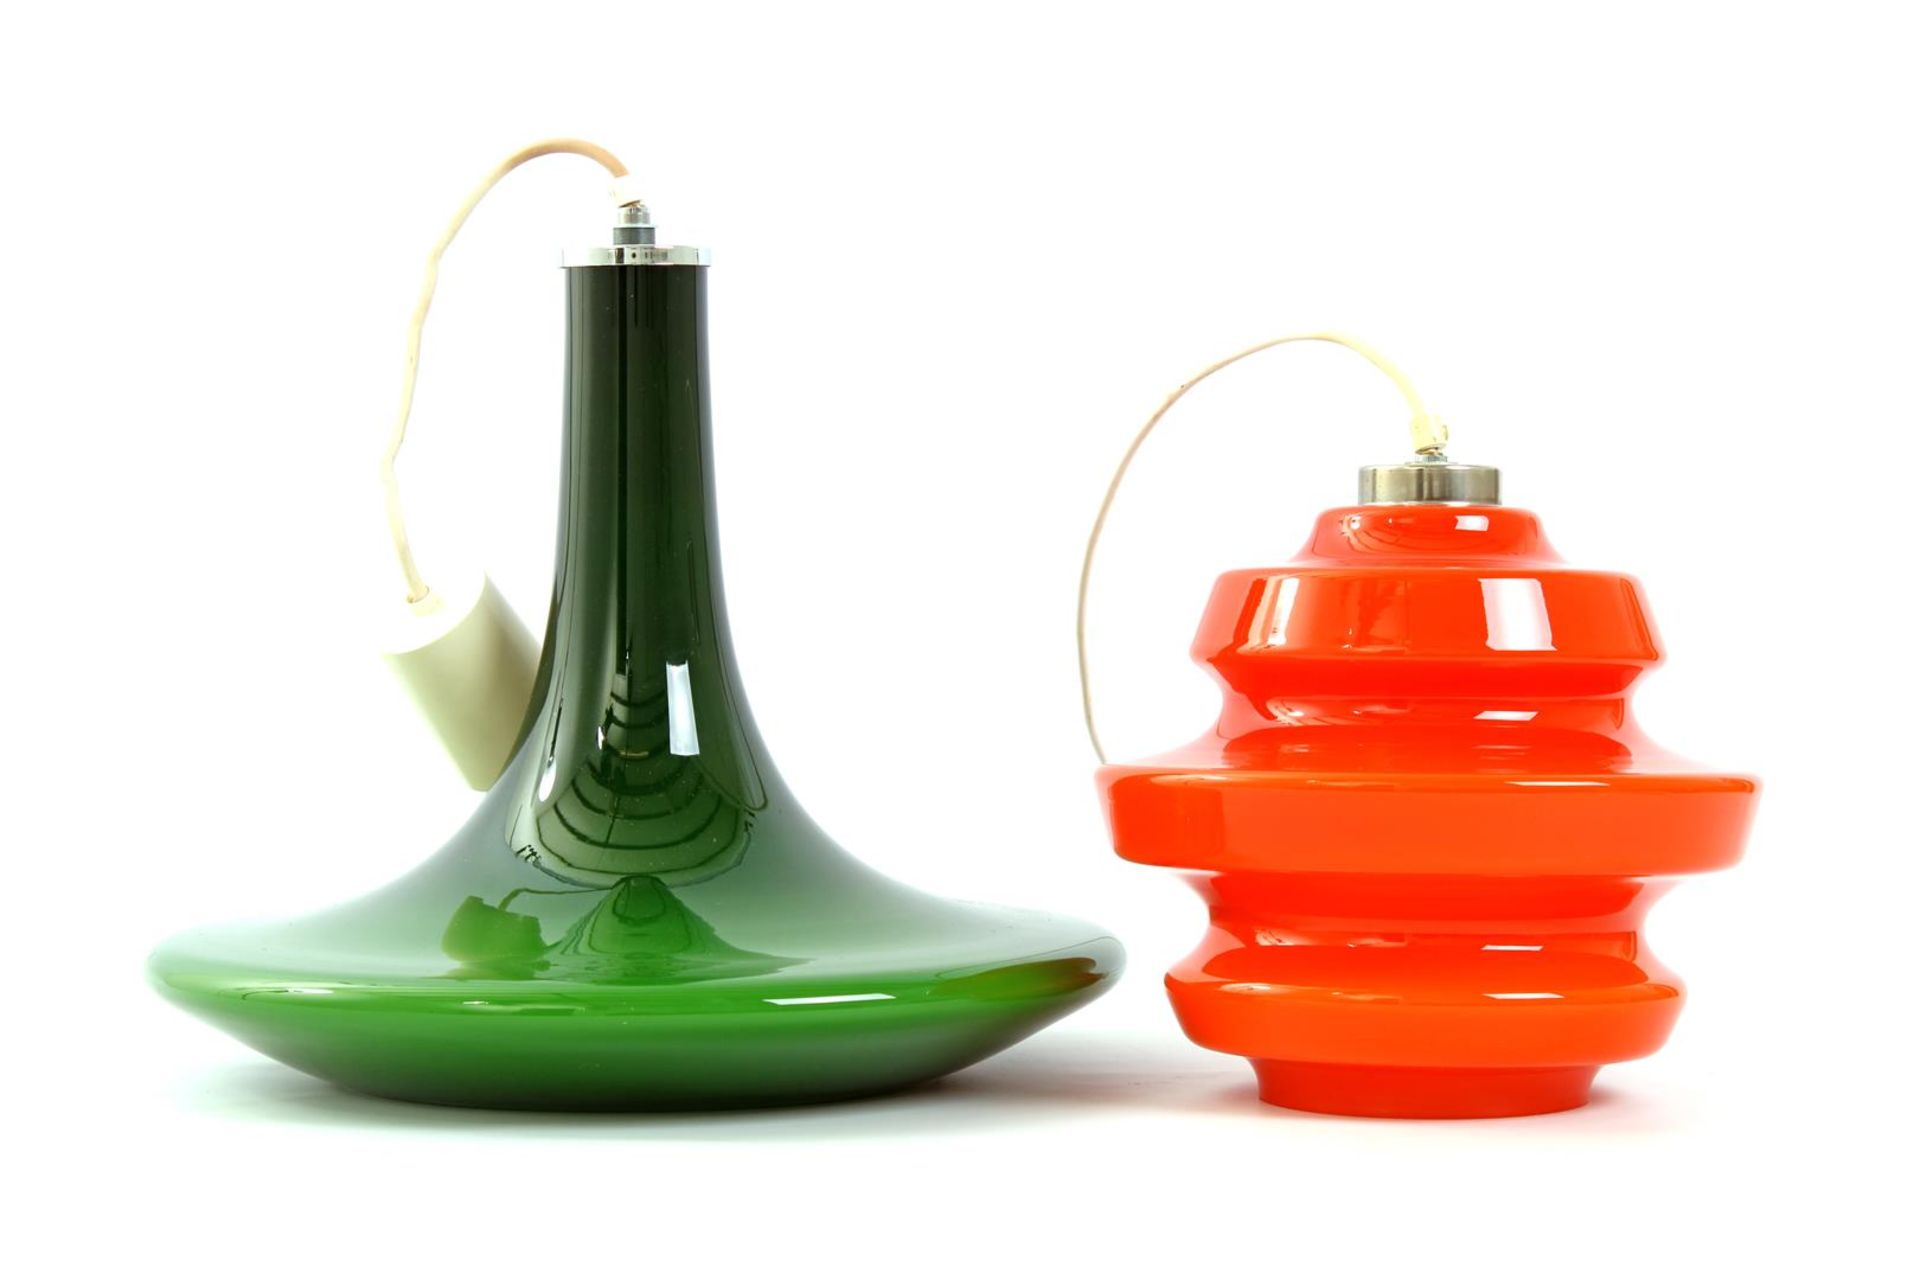 Green glass pendant lamp and orange glass pendant lamp